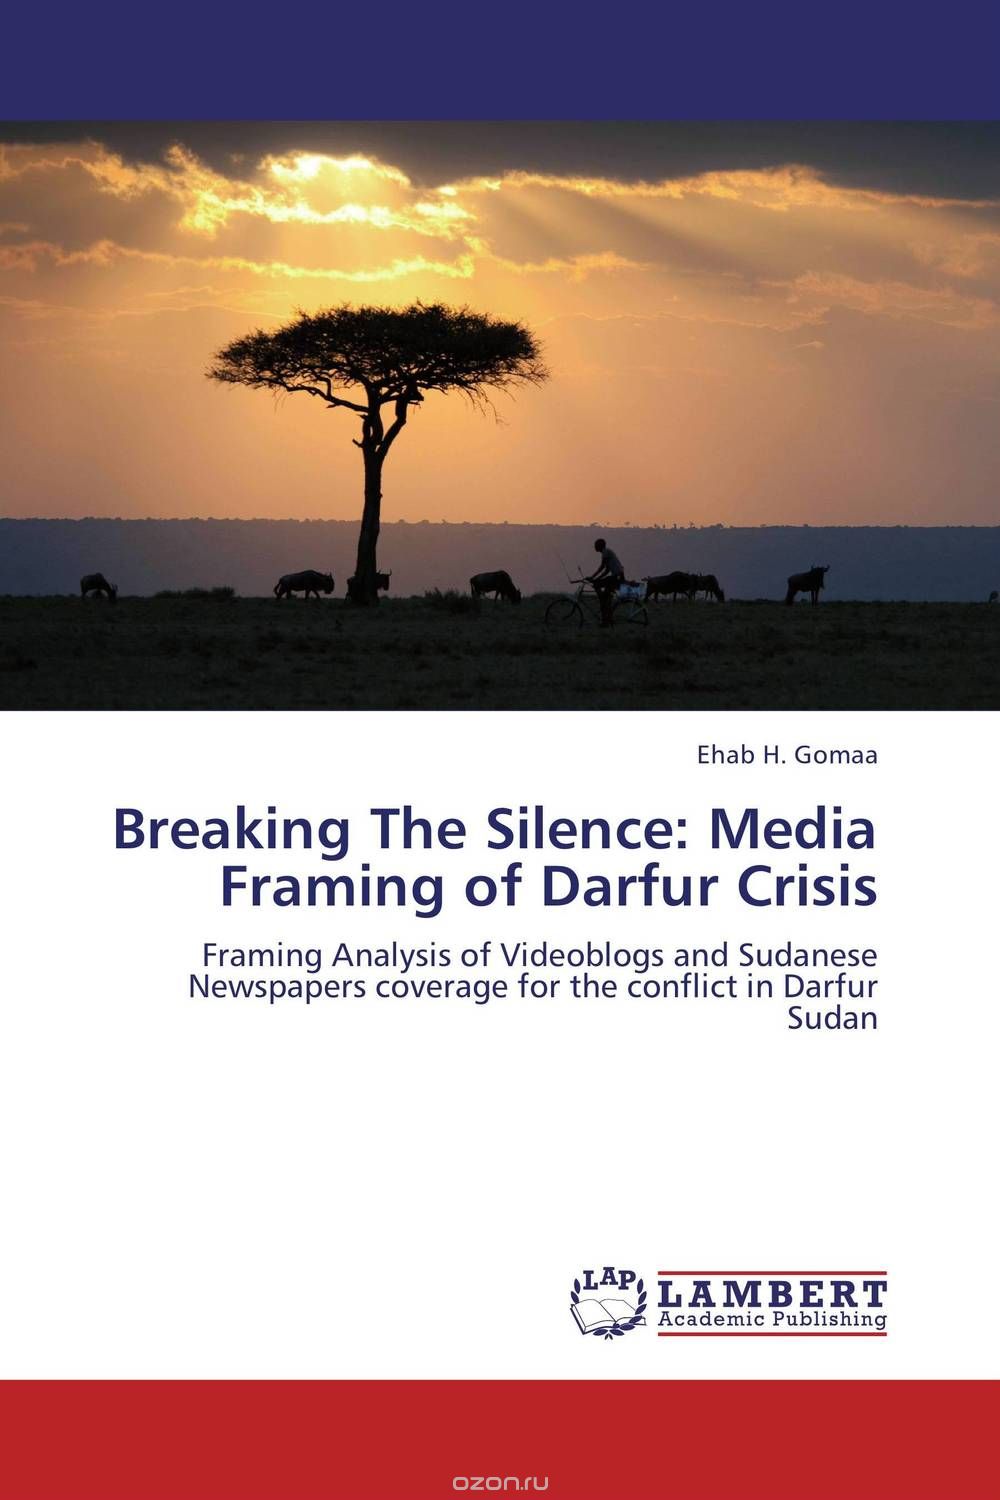 Breaking The Silence: Media Framing of Darfur Crisis